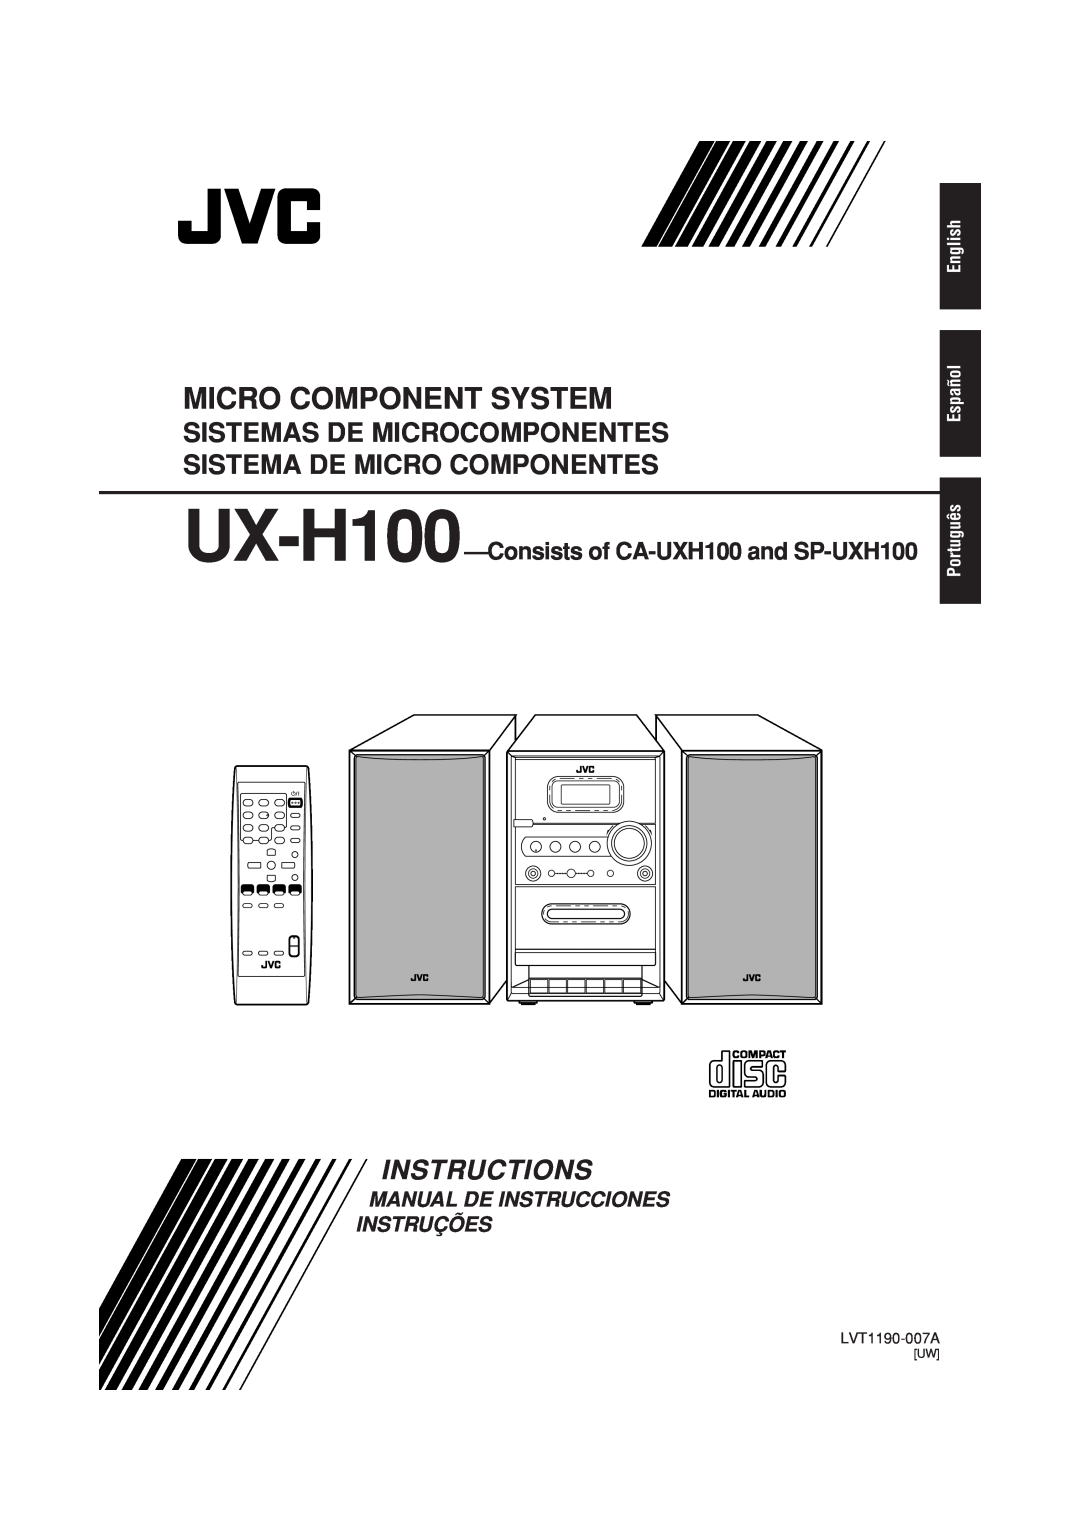 JVC UX-H100 manual Micro Component System, Instructions, Manual De Instrucciones Instruções, English Español, Português 